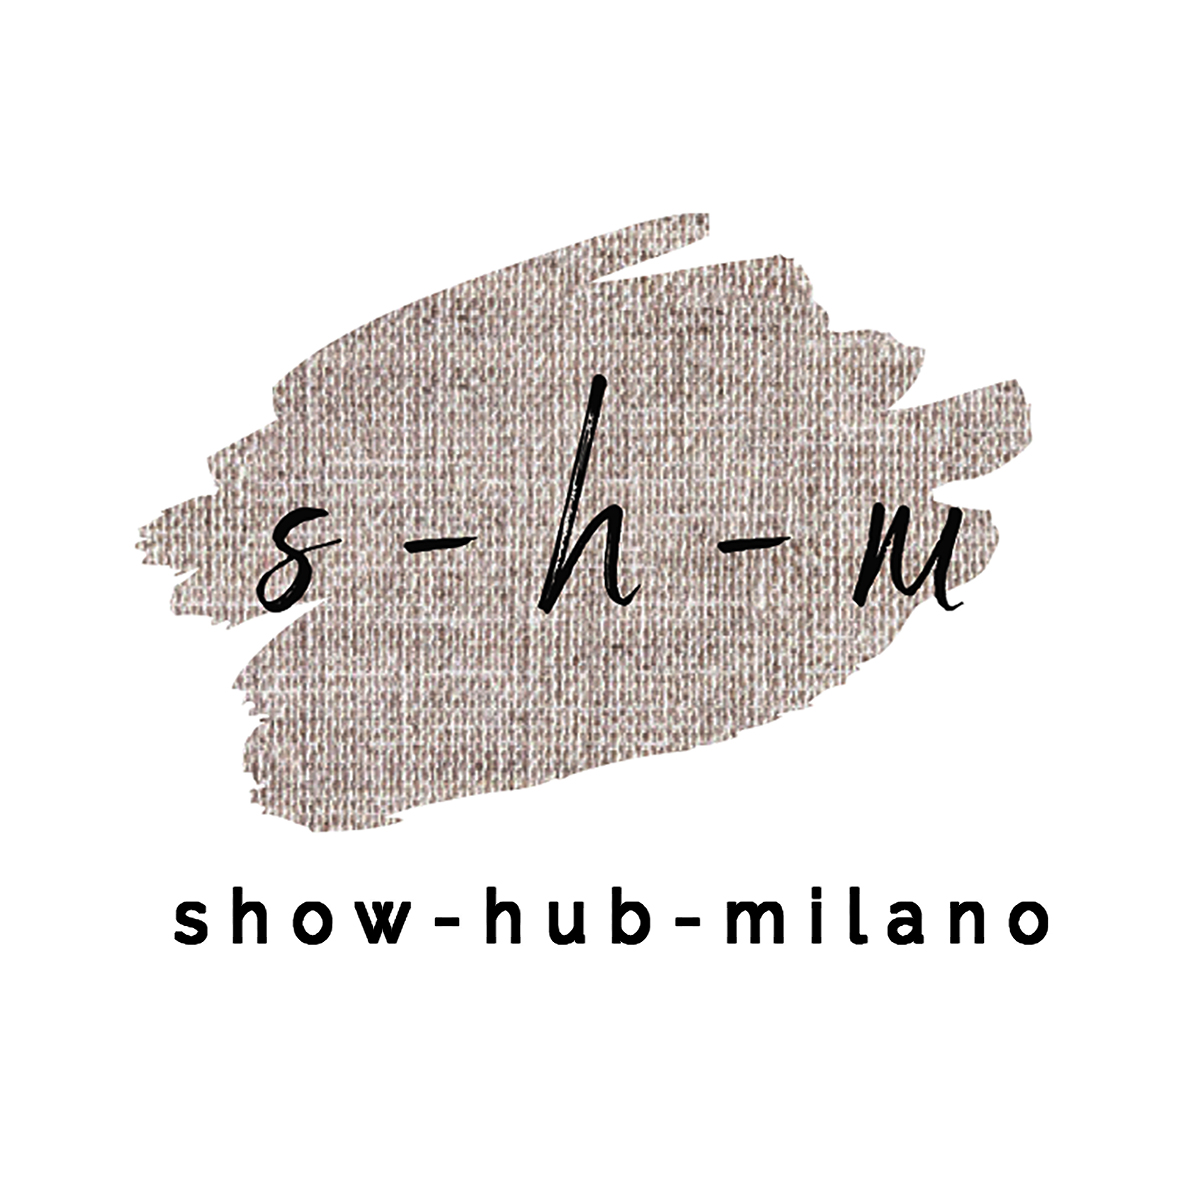 LOGO SHOW-HUB-MILANO